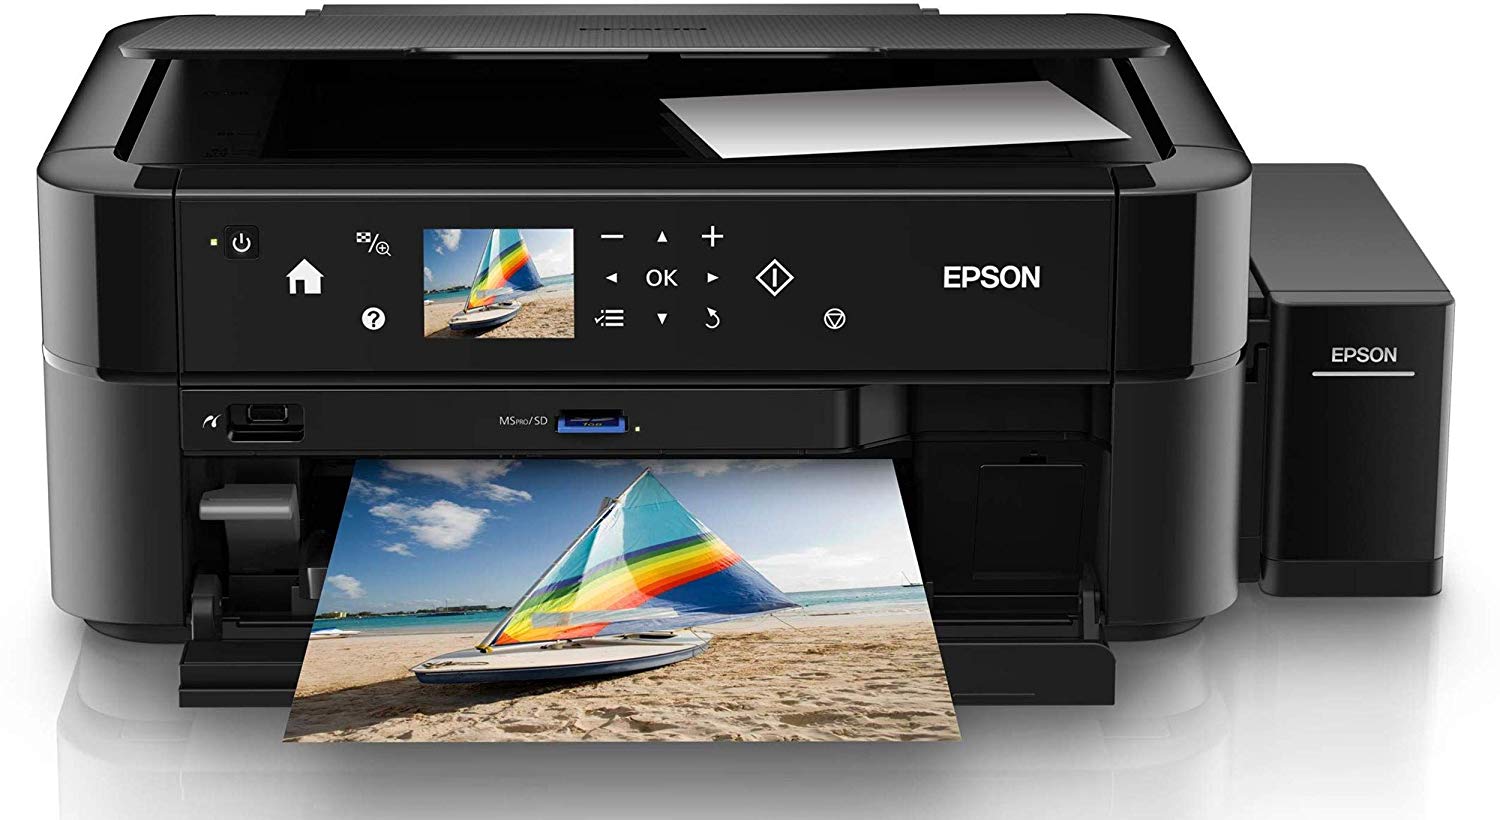  Epson  L850 Driver Downloads  Download  Drivers Printer  Free